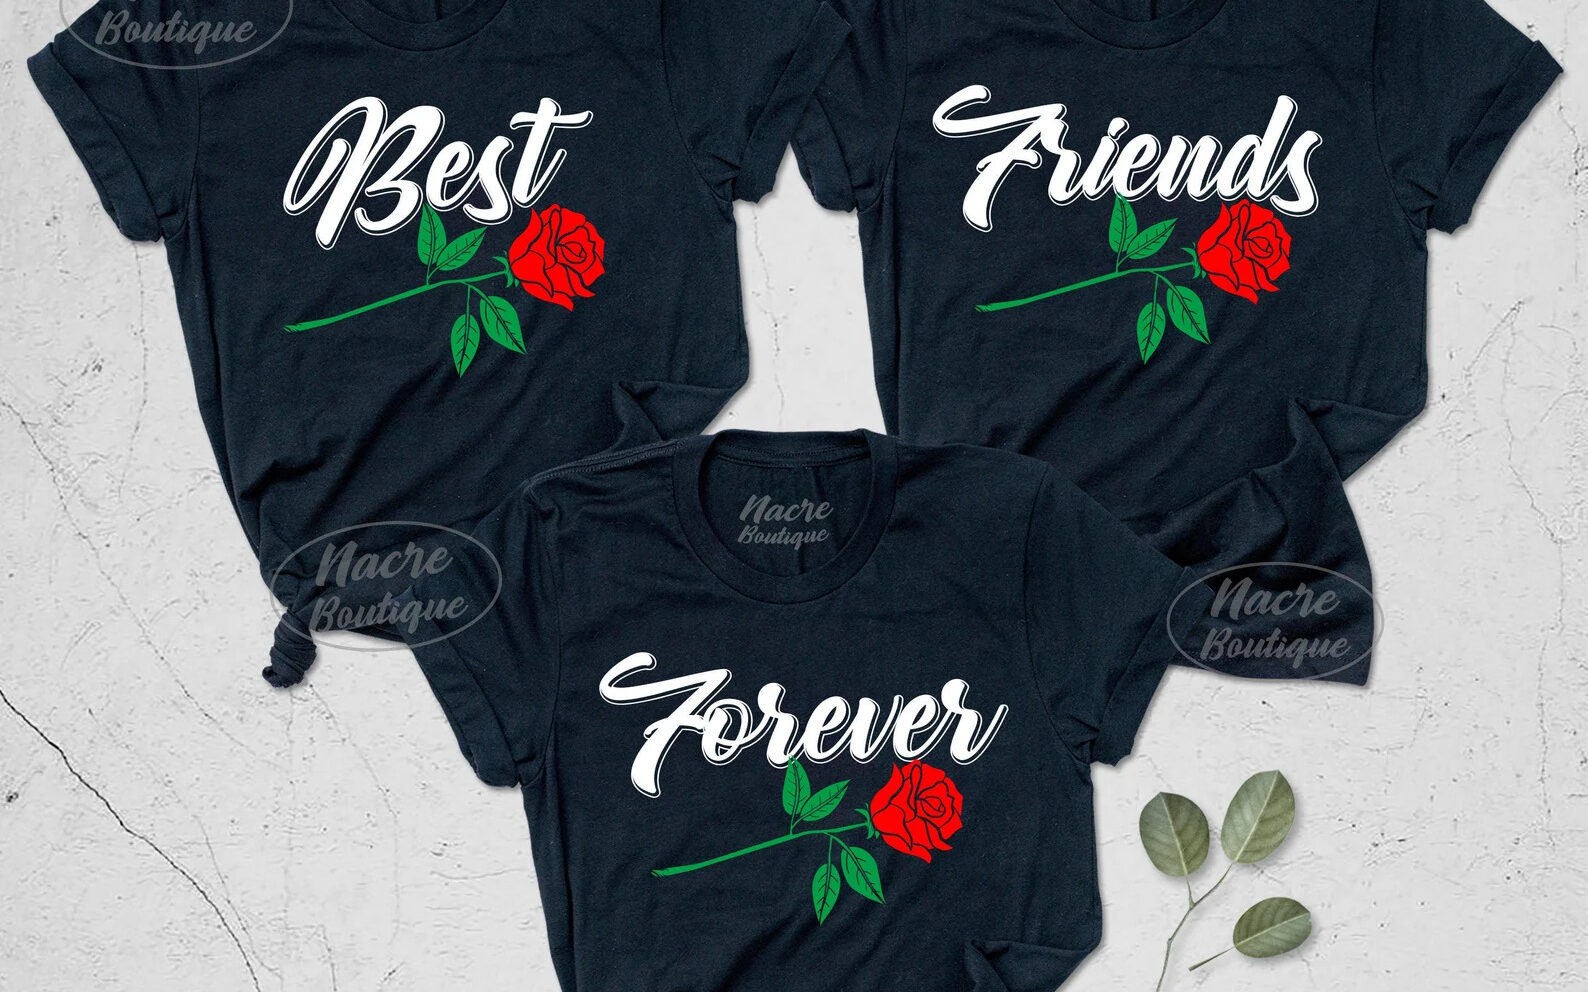 Best Friend T-shirt Design Ideas featuring initials or names